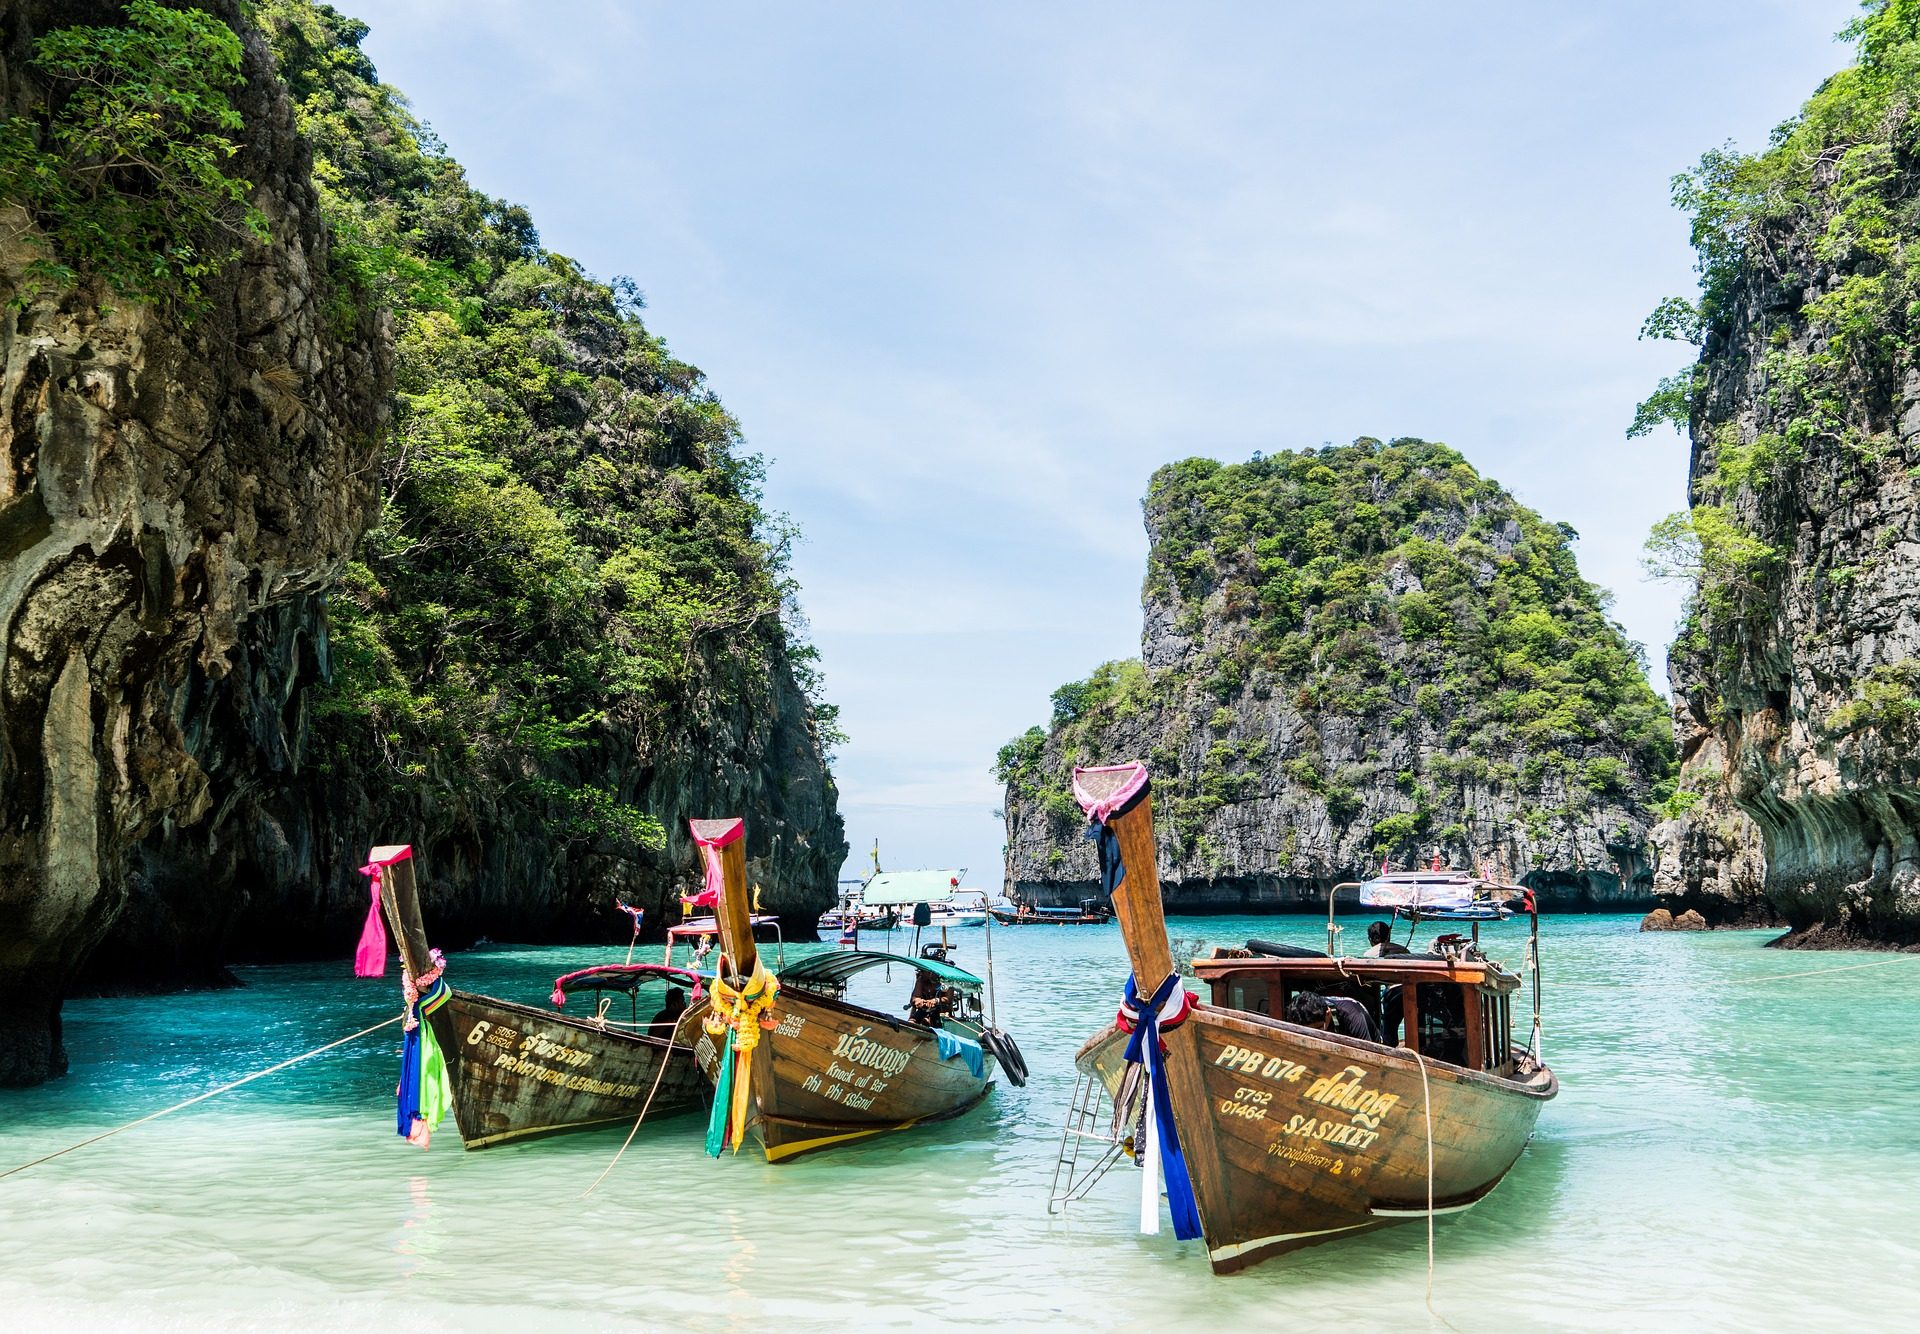 Pauschalreise Phuket Patong Beach - Thailand 11 Tage günstig ab 515,00€